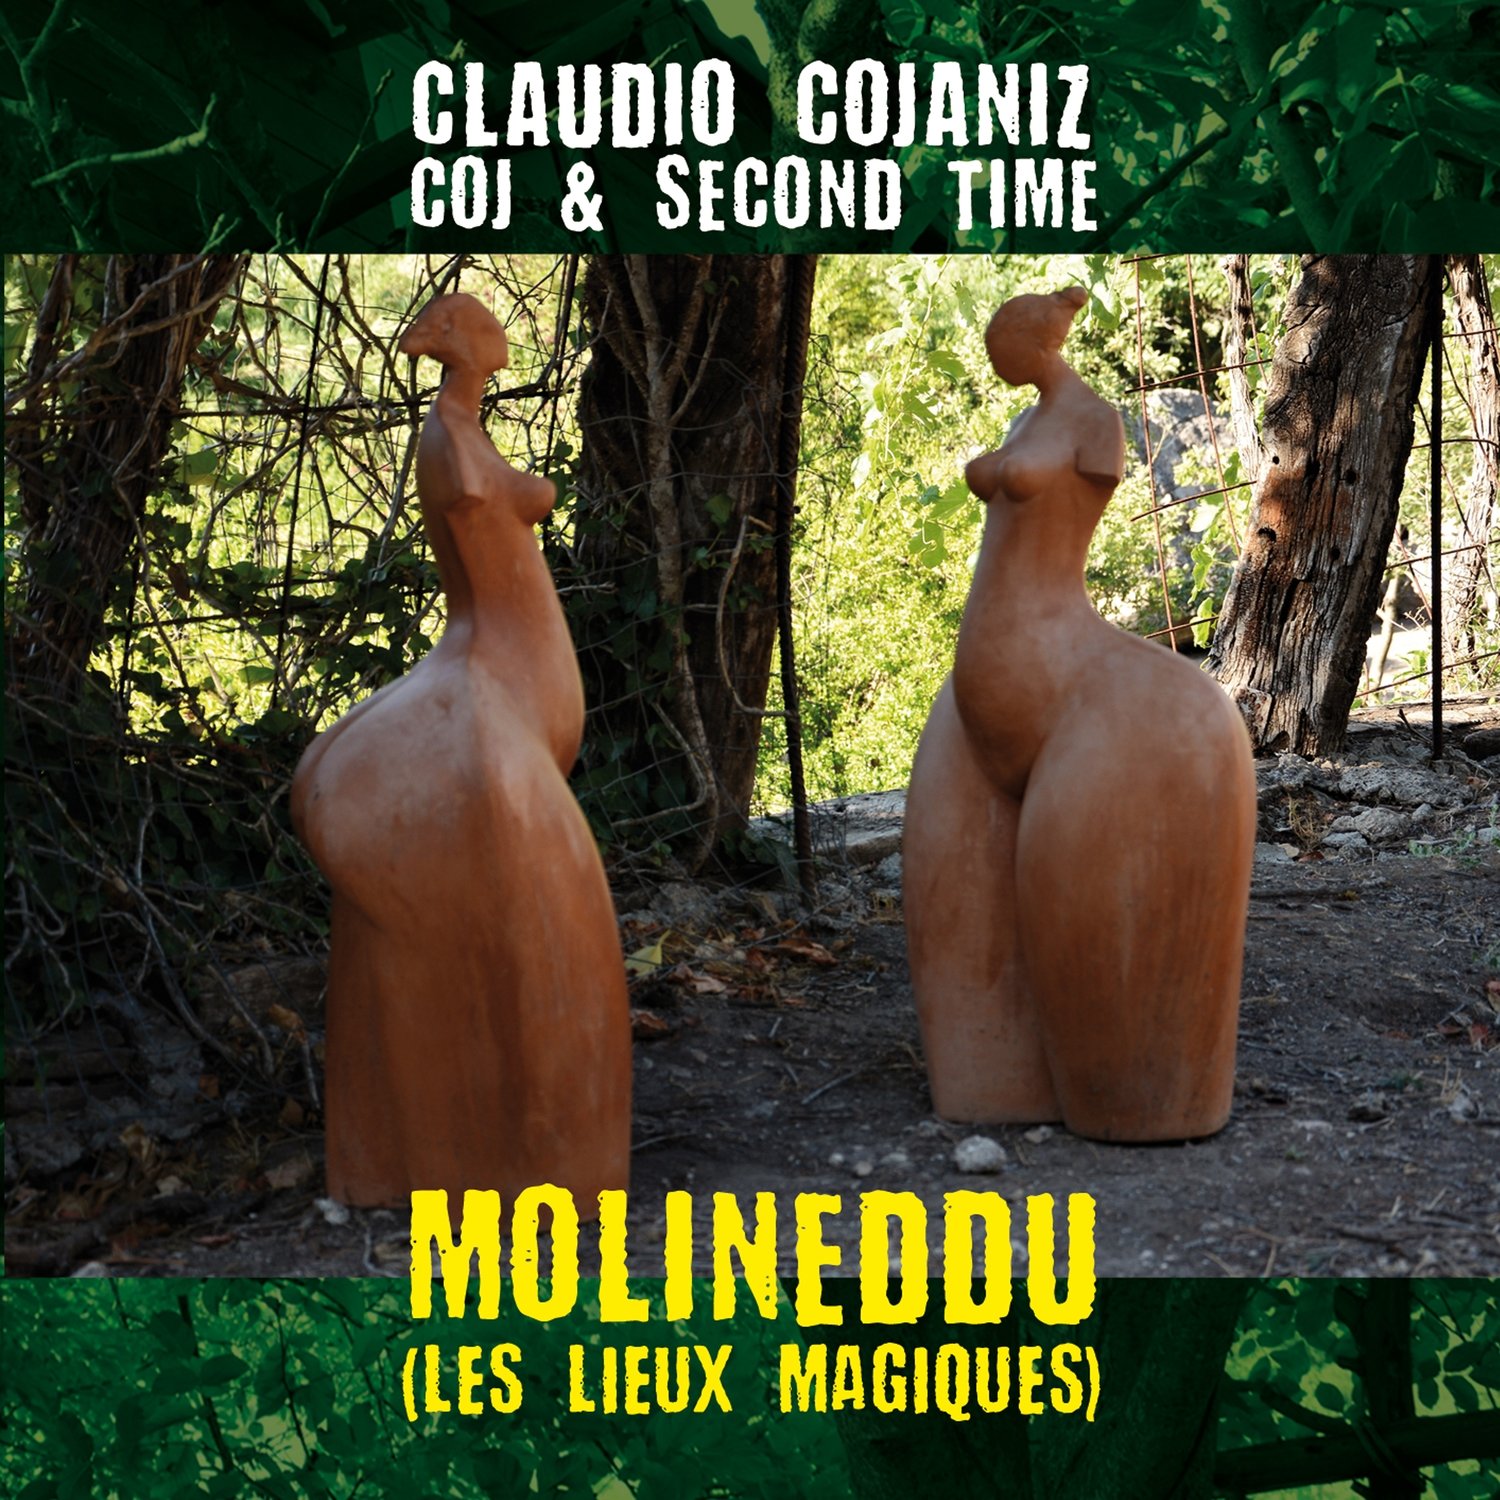 Claudio Cojaniz - COJ & SECOND TIME «Molineddu»